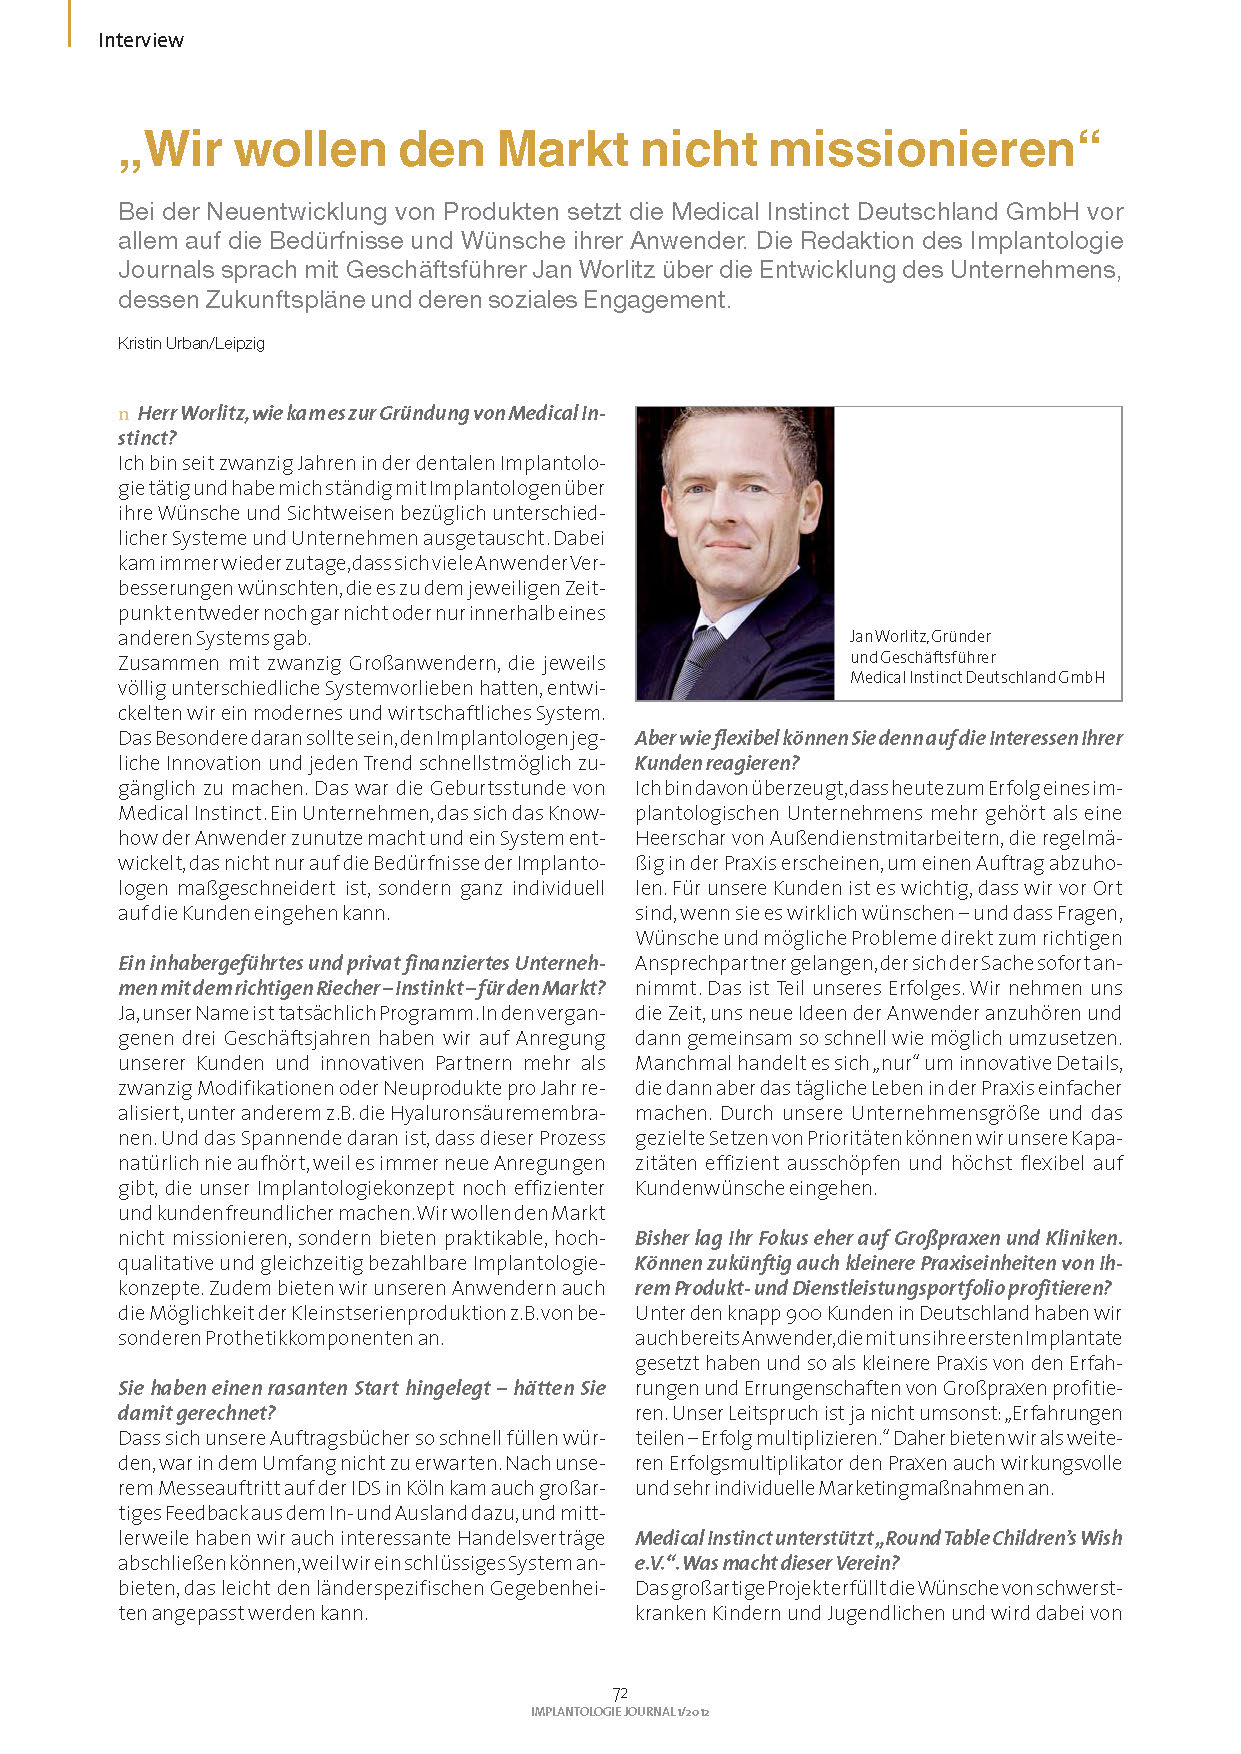 Implantologie Journal - Interview Jan Worlitz